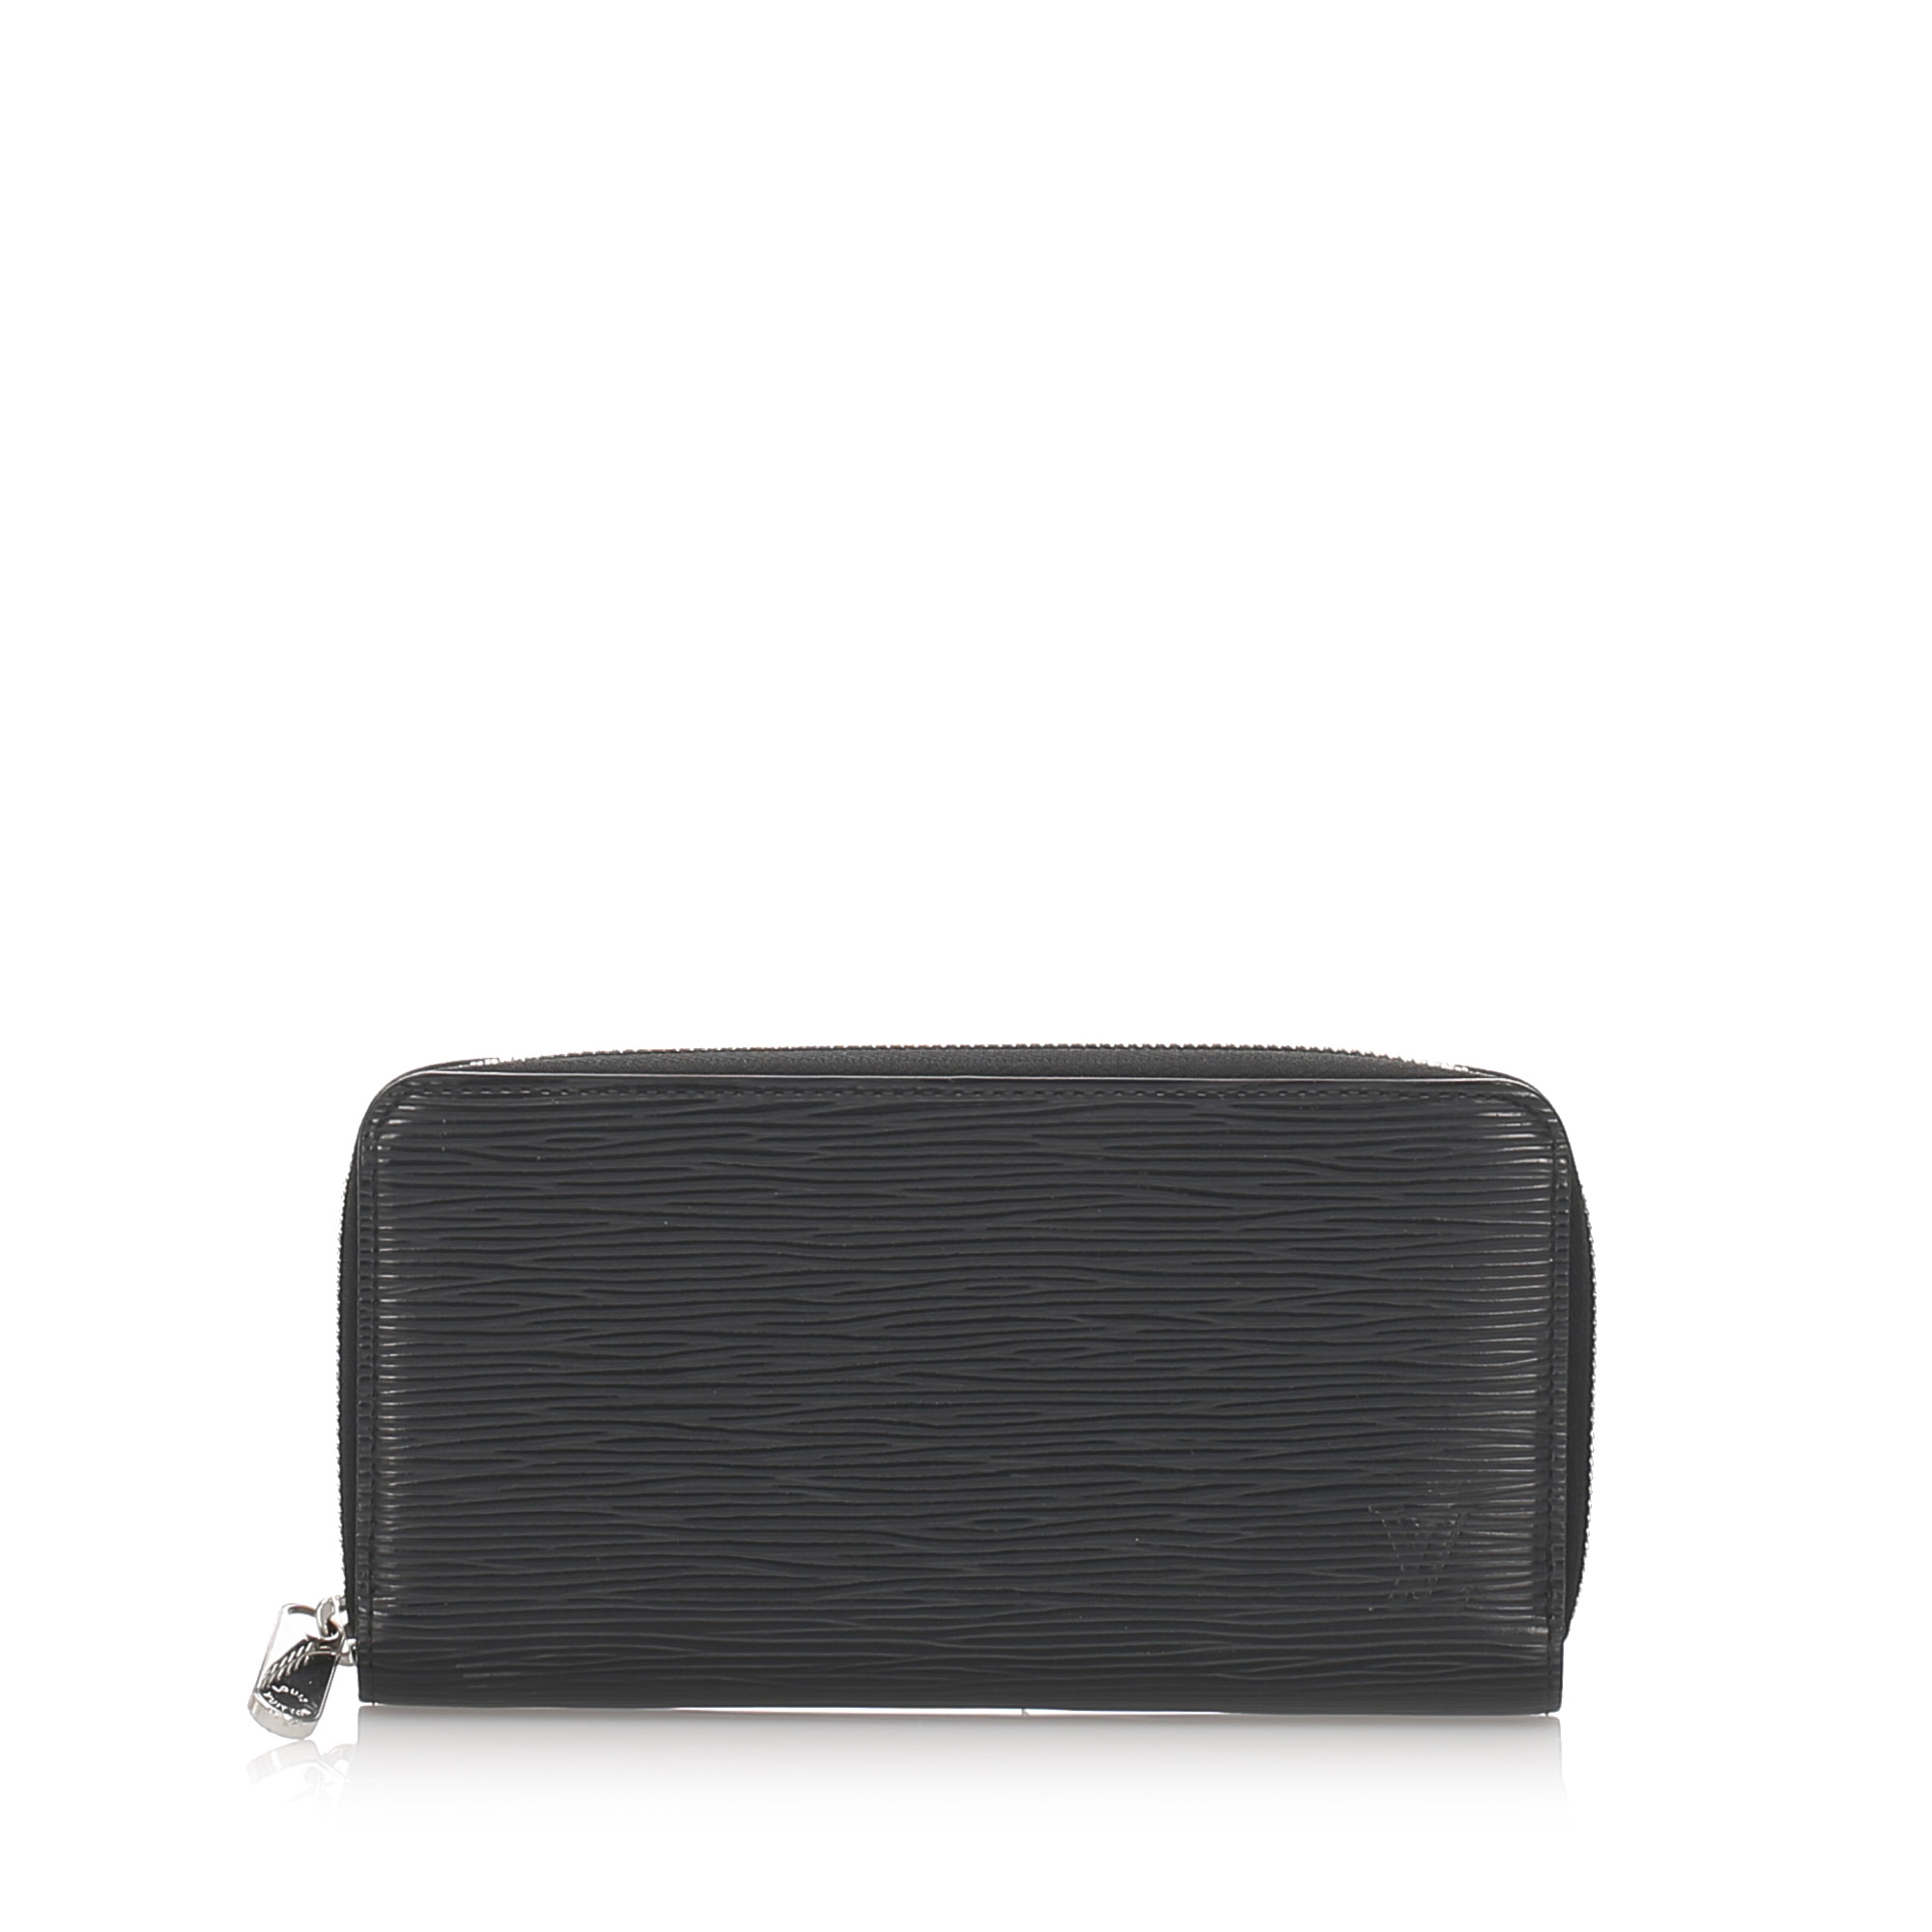 Pre-Loved Louis Vuitton Black Epi Leather Zippy Wallet Spain | eBay